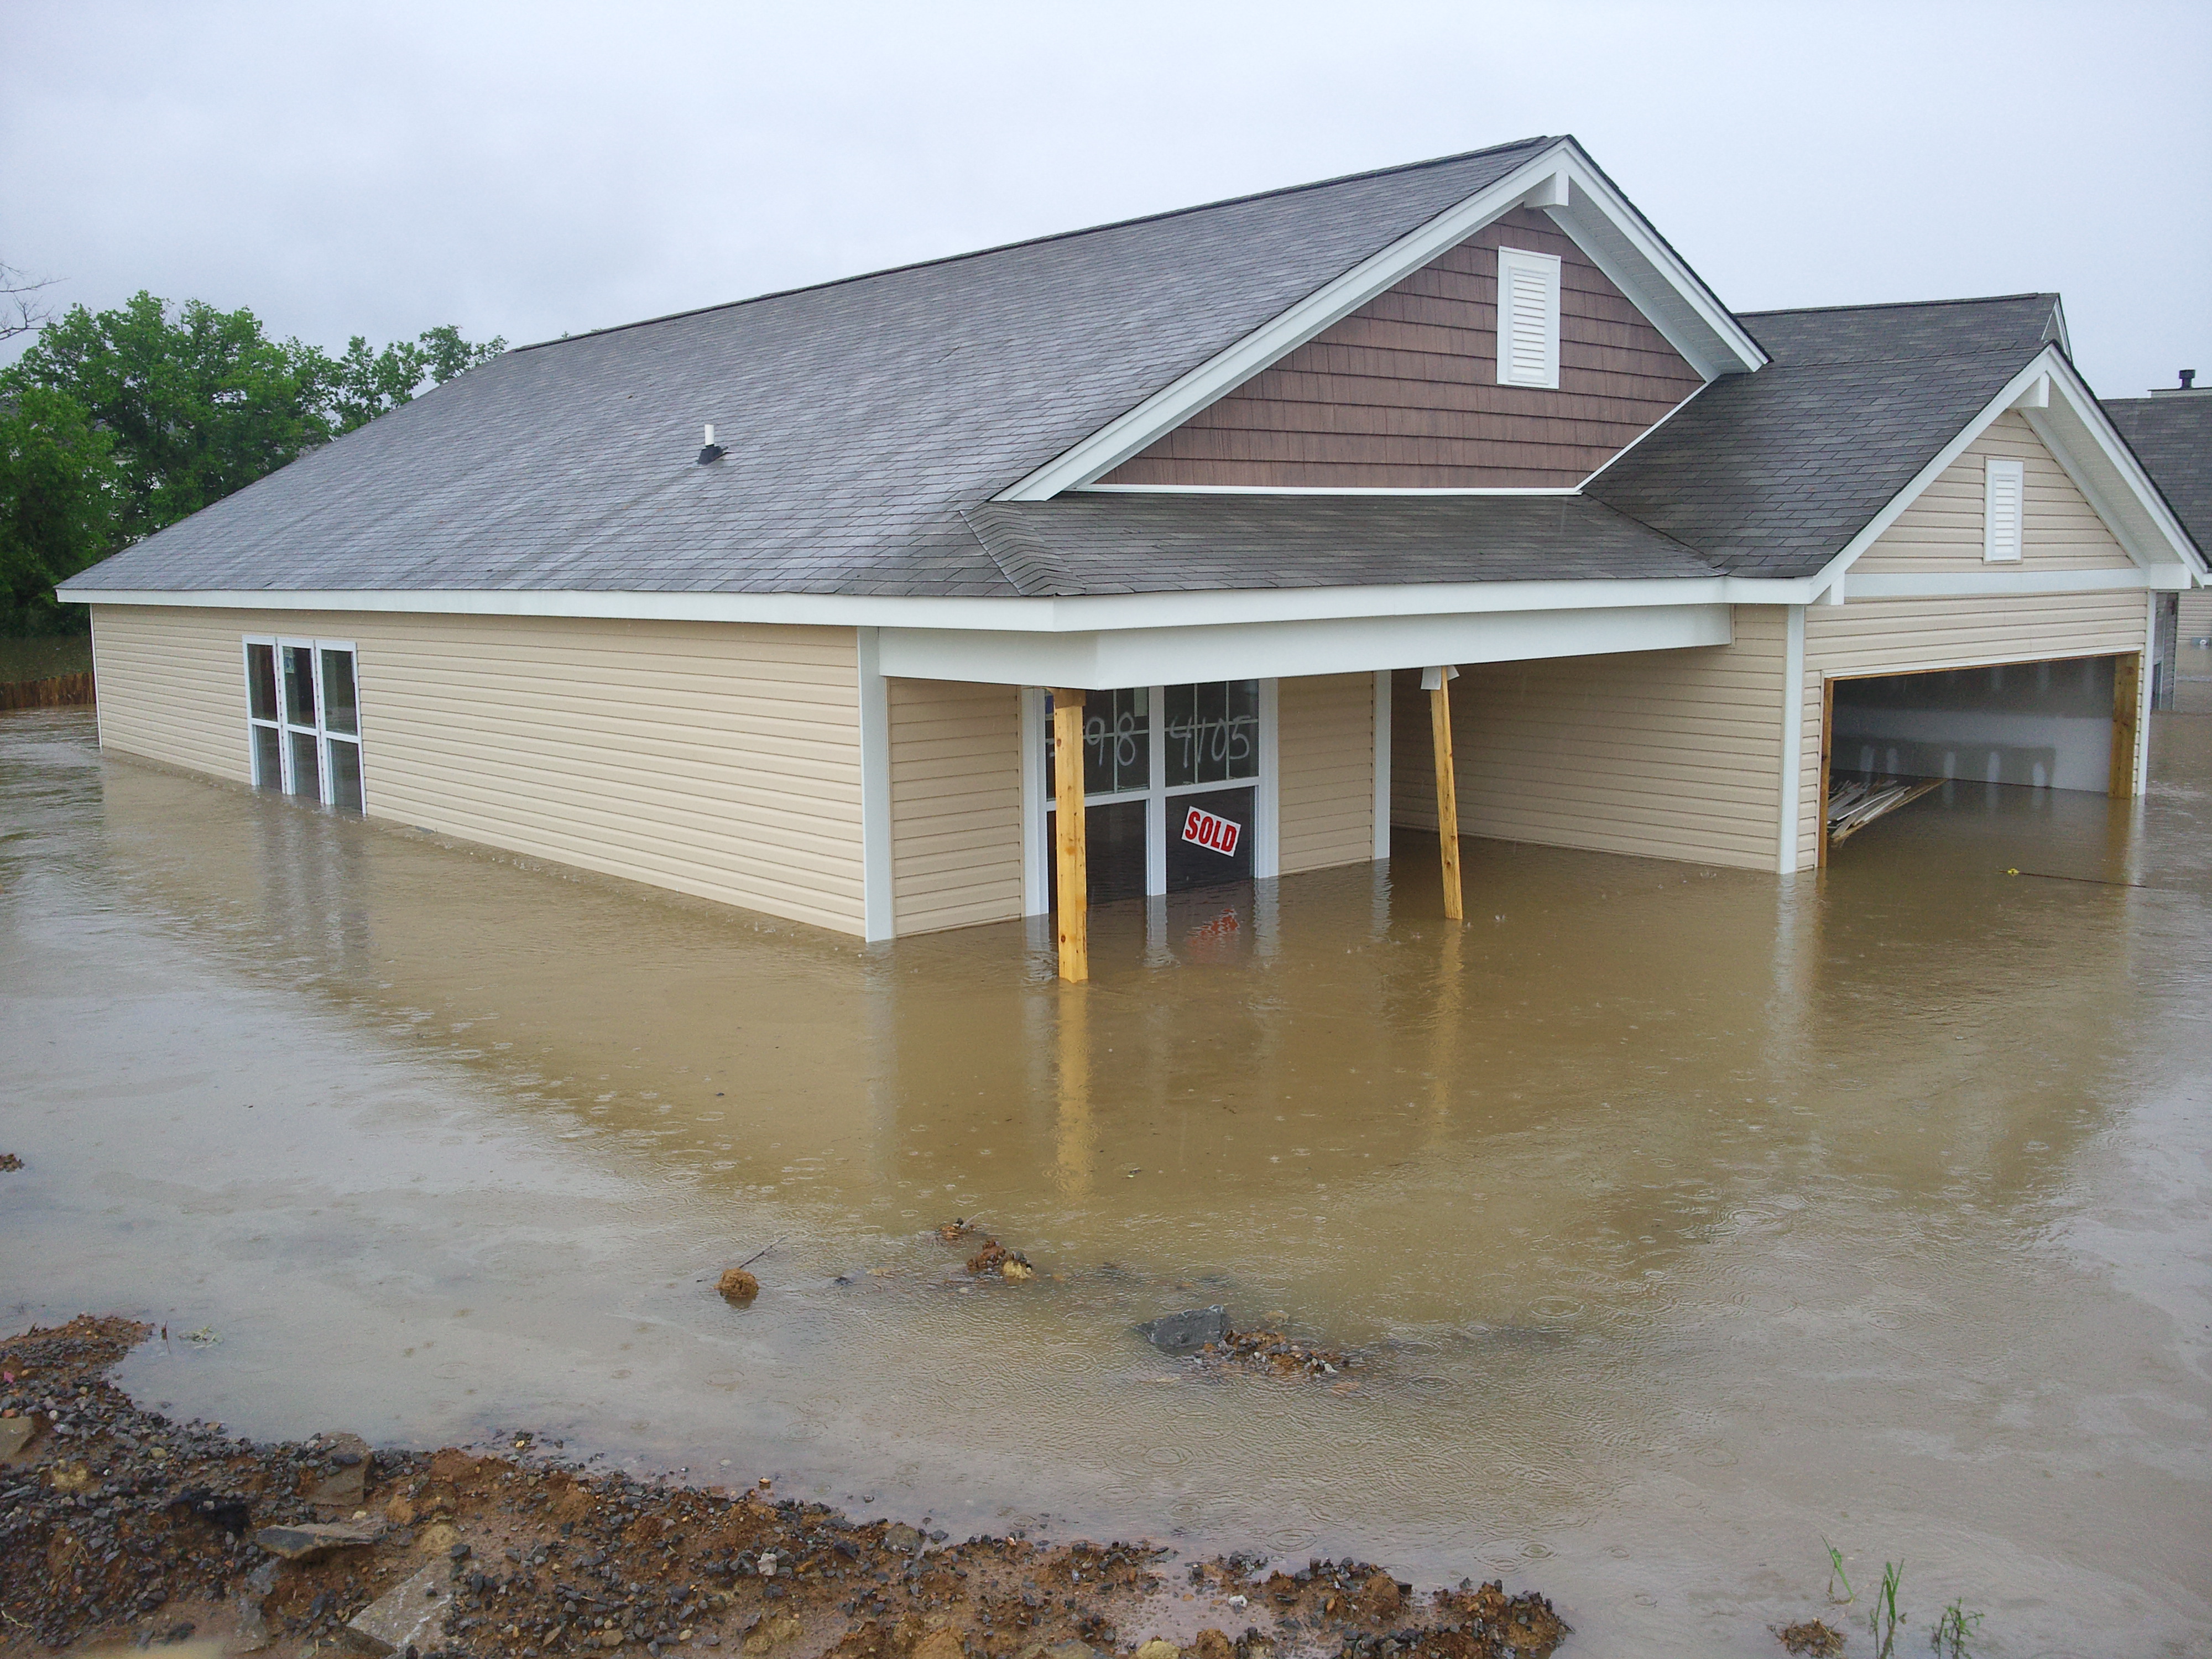 2010 Tennessee floods - Wikipedia